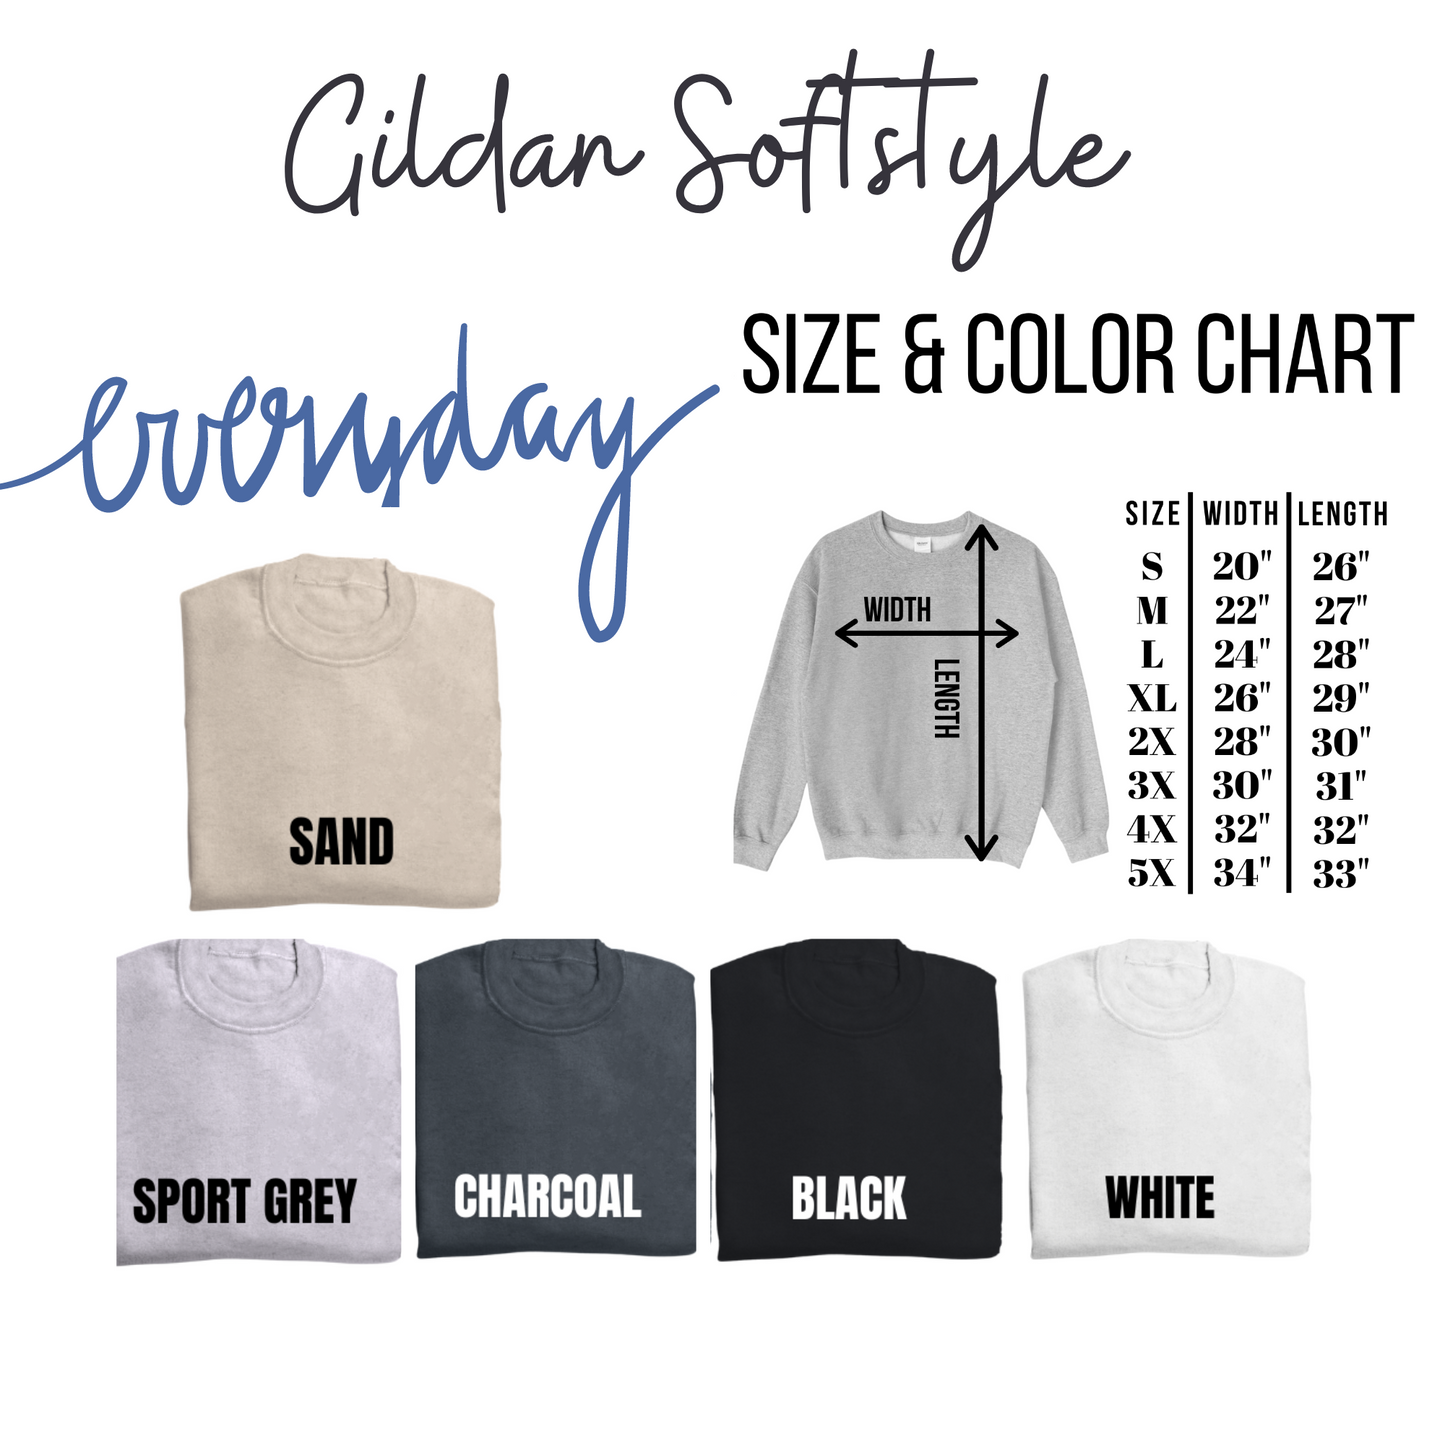 Halloween BOO Sequin Embroidery Effect Gildan Softstyle T-shirt or Sweatshirt